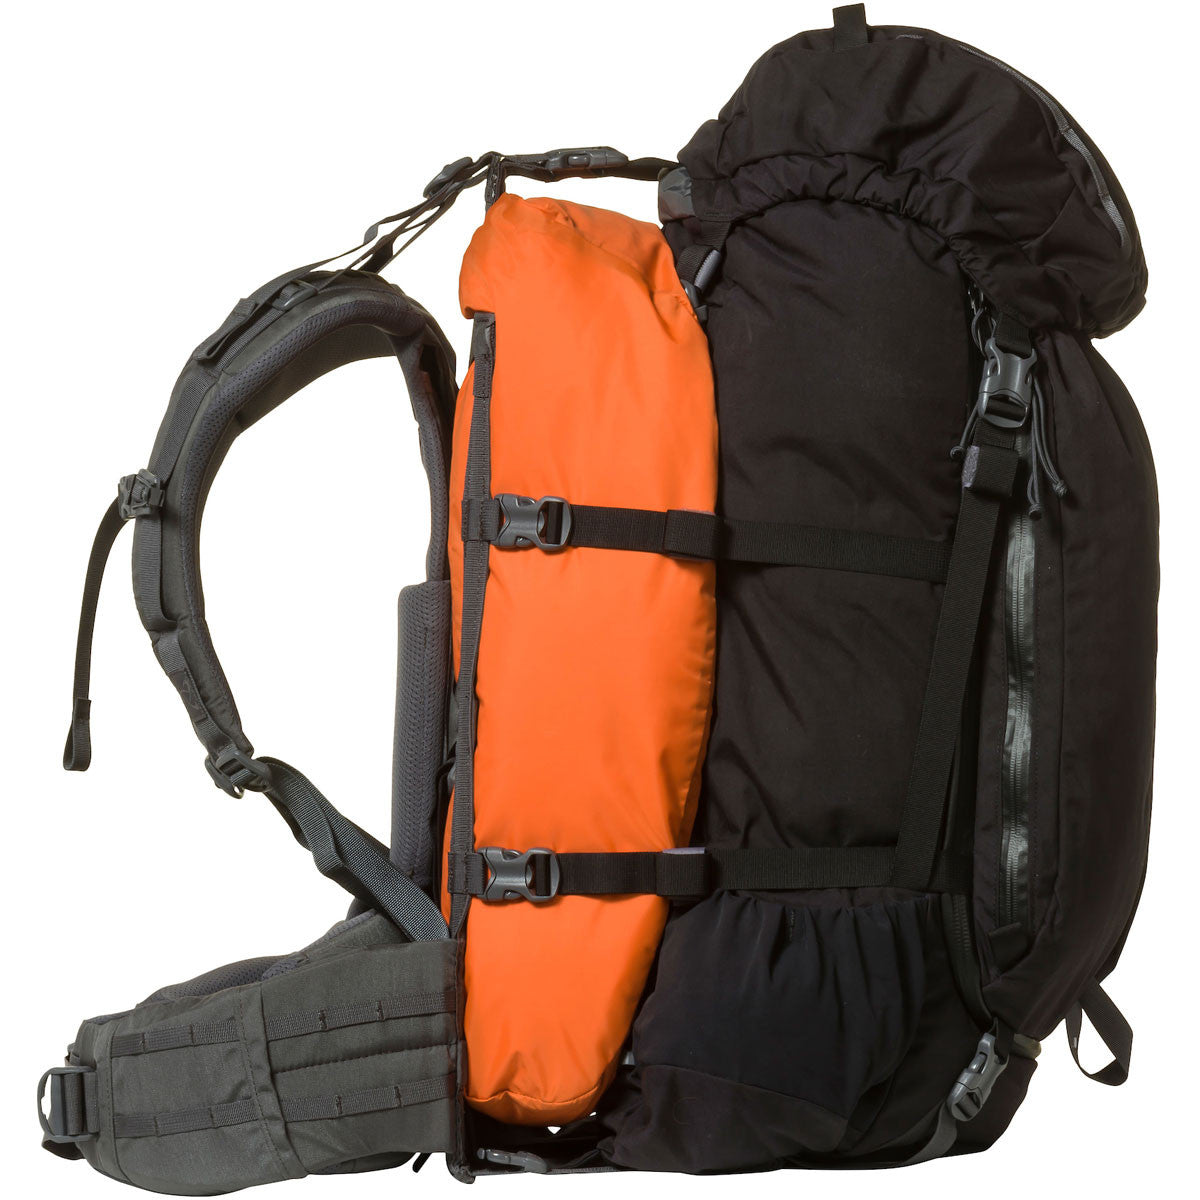 Terraframe 65L Backpack